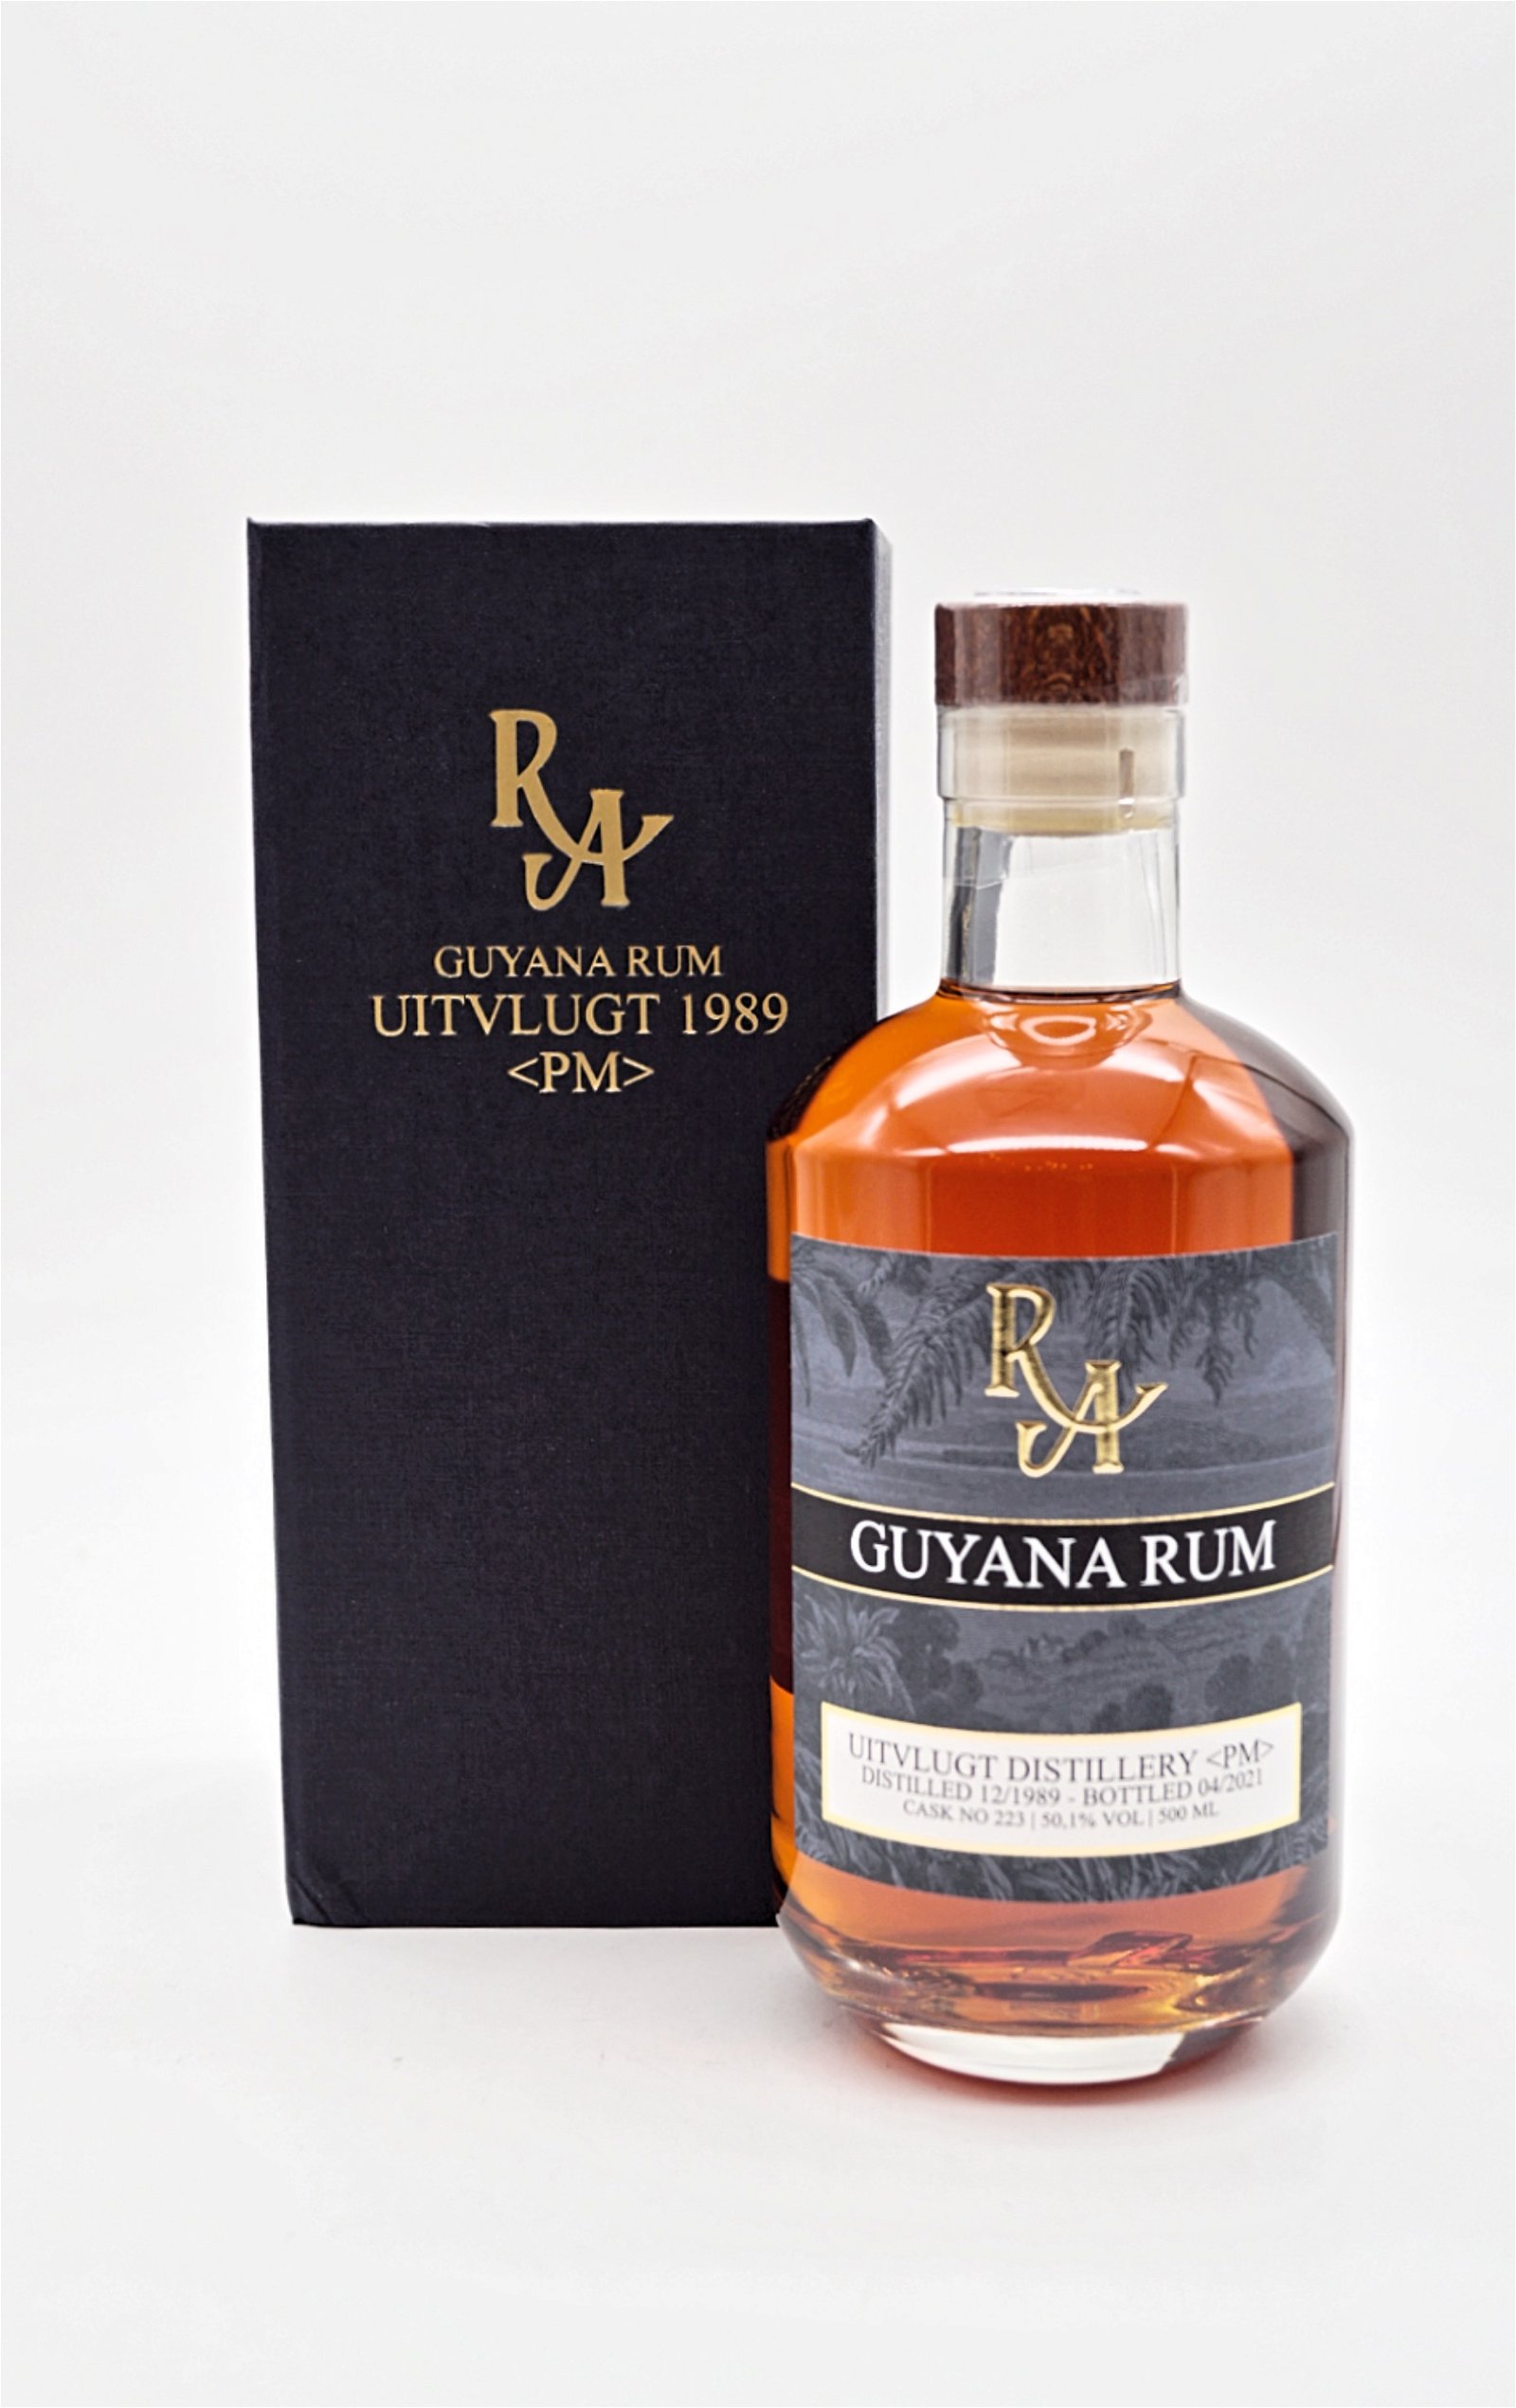 Rum Artesanal Uitvlugt 1989/2021 PM Cask #223 Guyana Rum